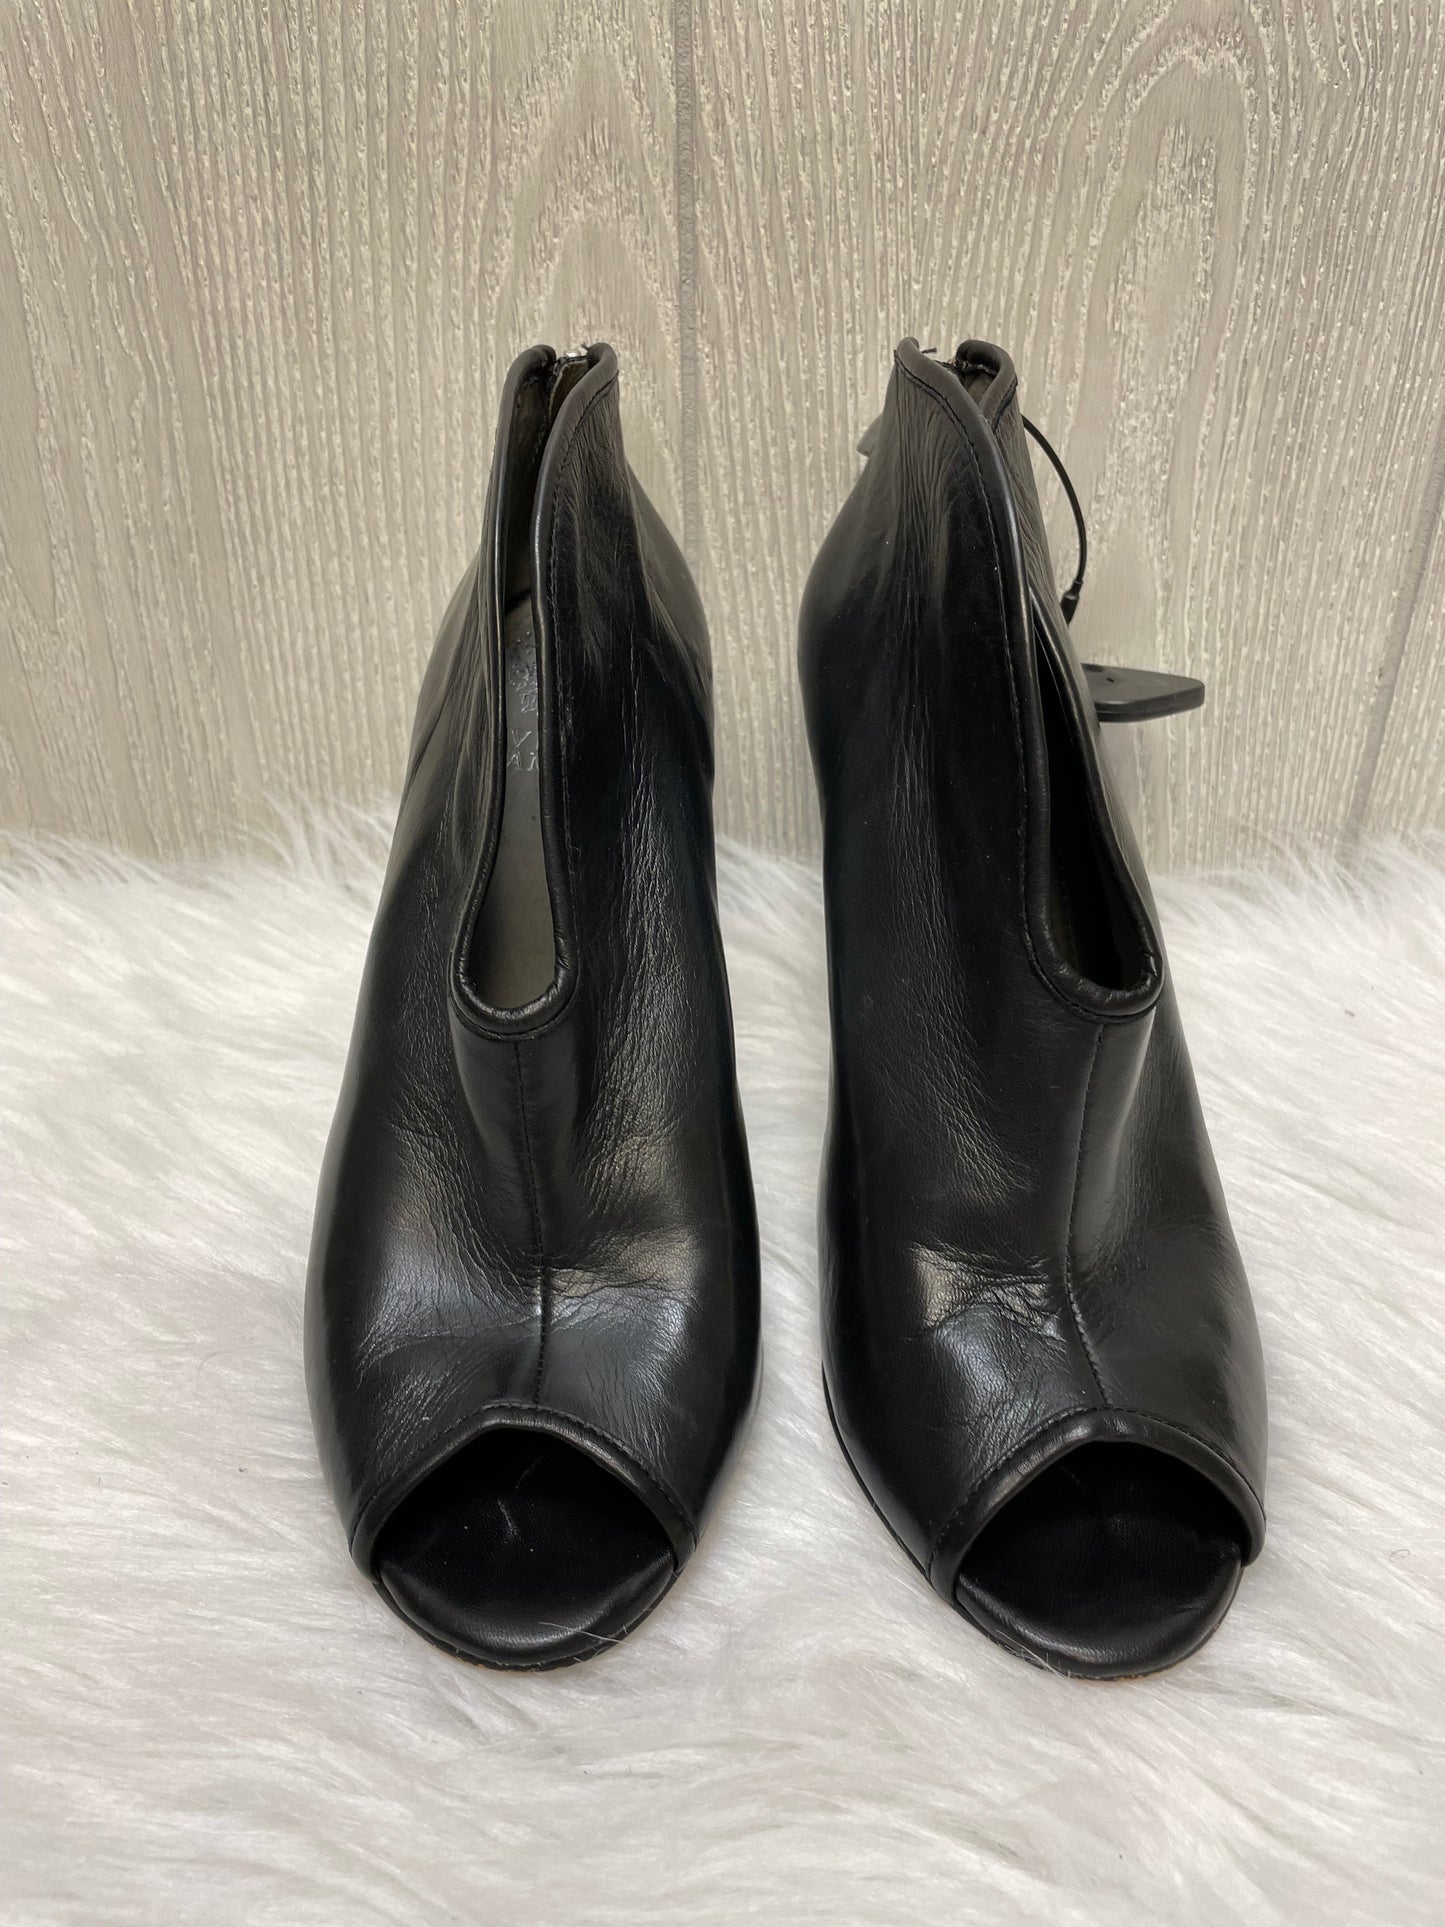 Black Shoes Heels Block Vince Camuto, Size 7.5